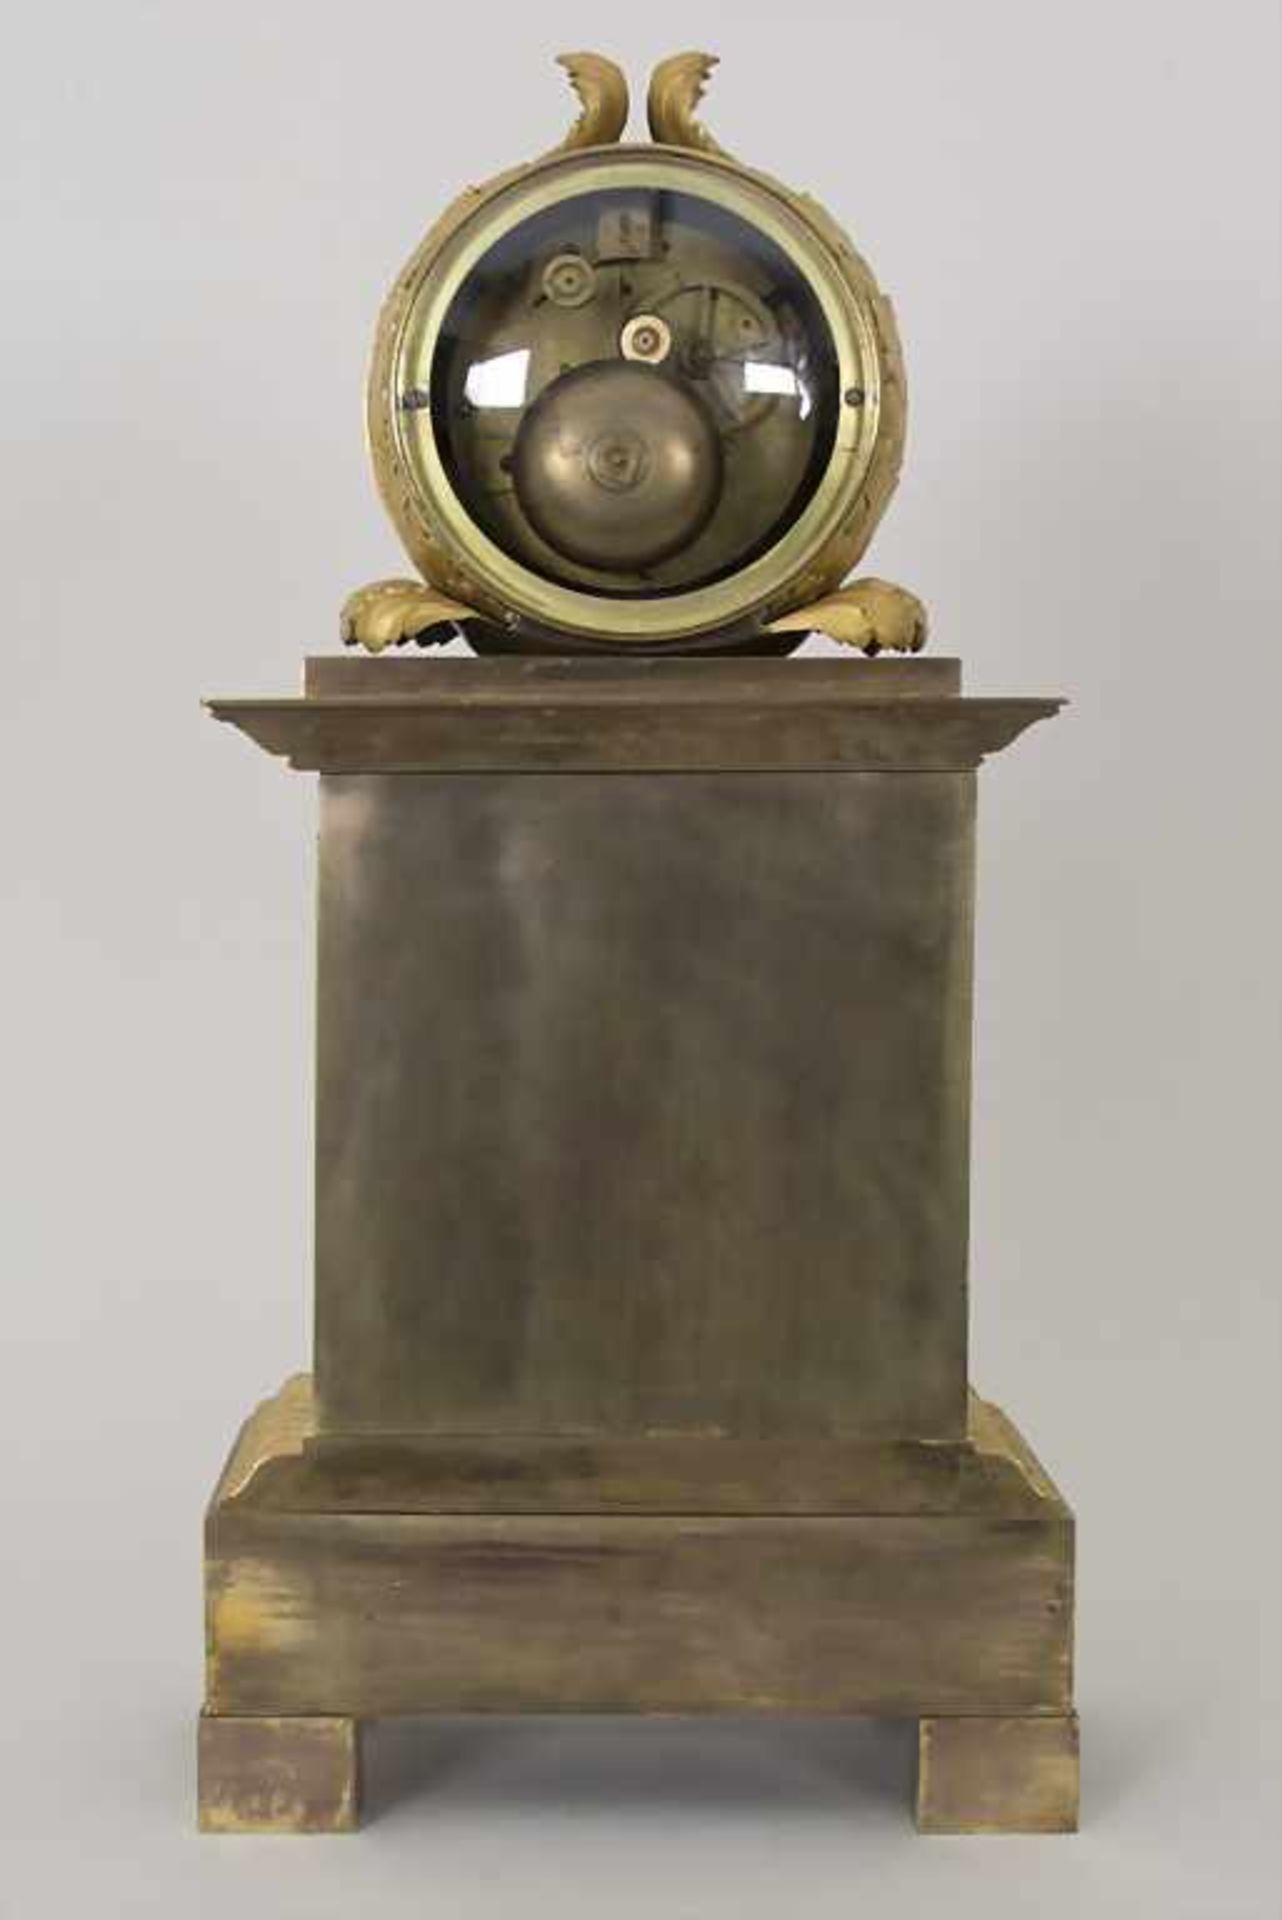 Empire Pendule 'Die Künste' / An Empire clock 'The fine arts', Paris, um 1800 - Image 5 of 11